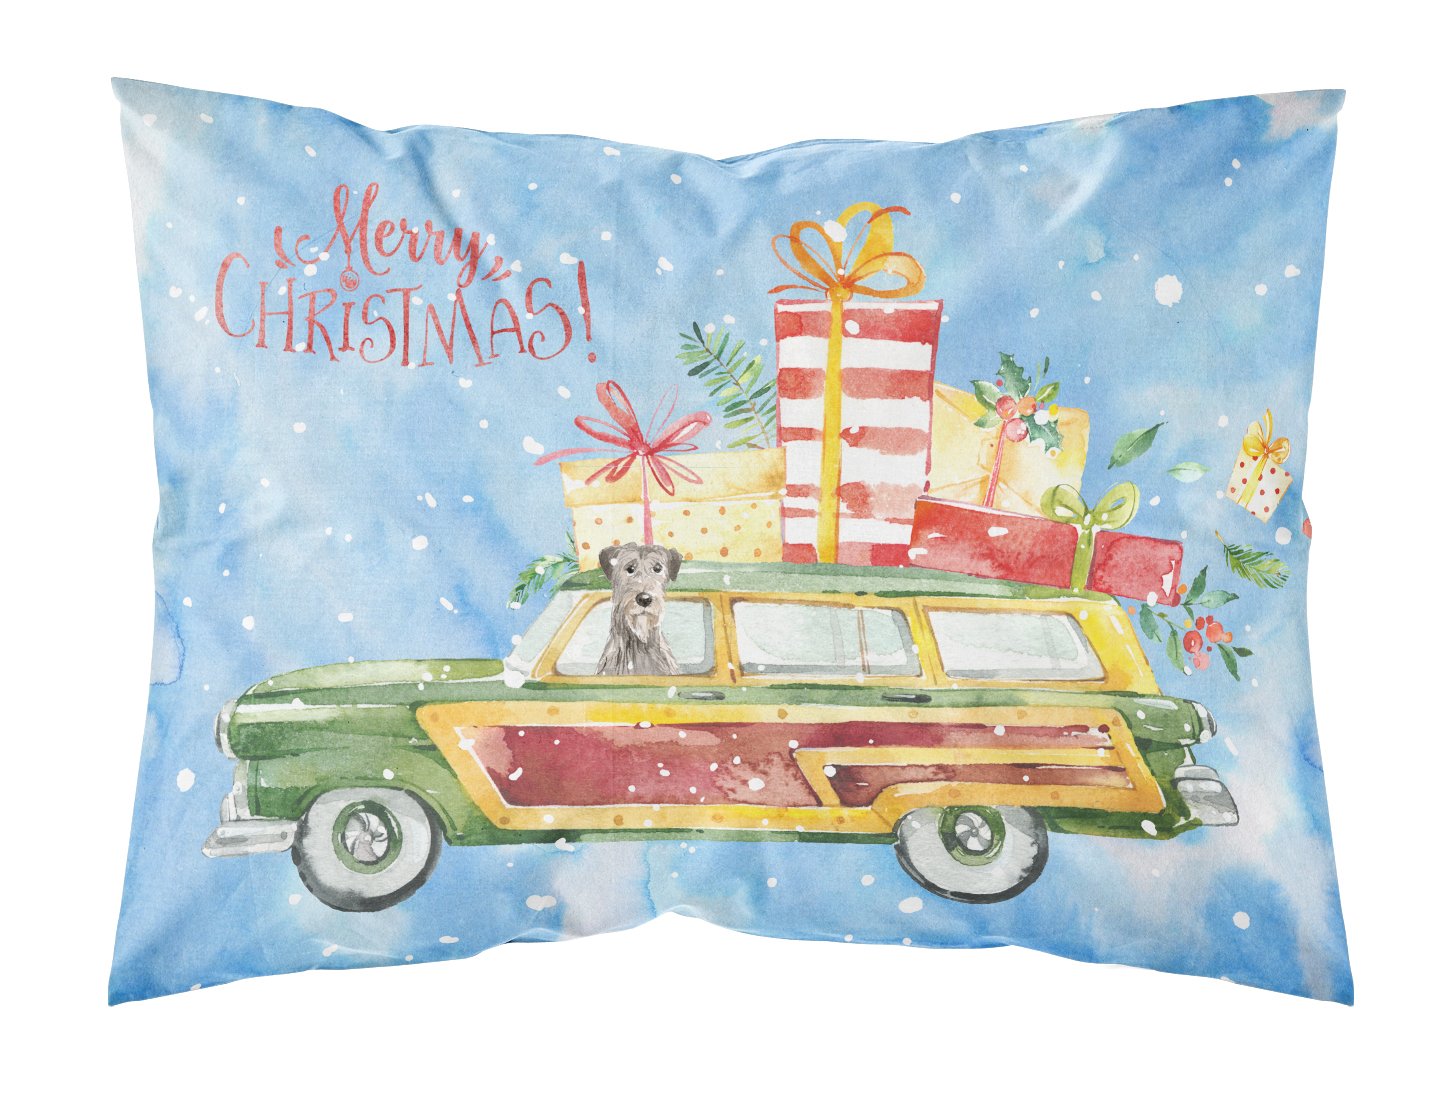 Merry Christmas Irish Wolfhound Fabric Standard Pillowcase CK2409PILLOWCASE by Caroline's Treasures